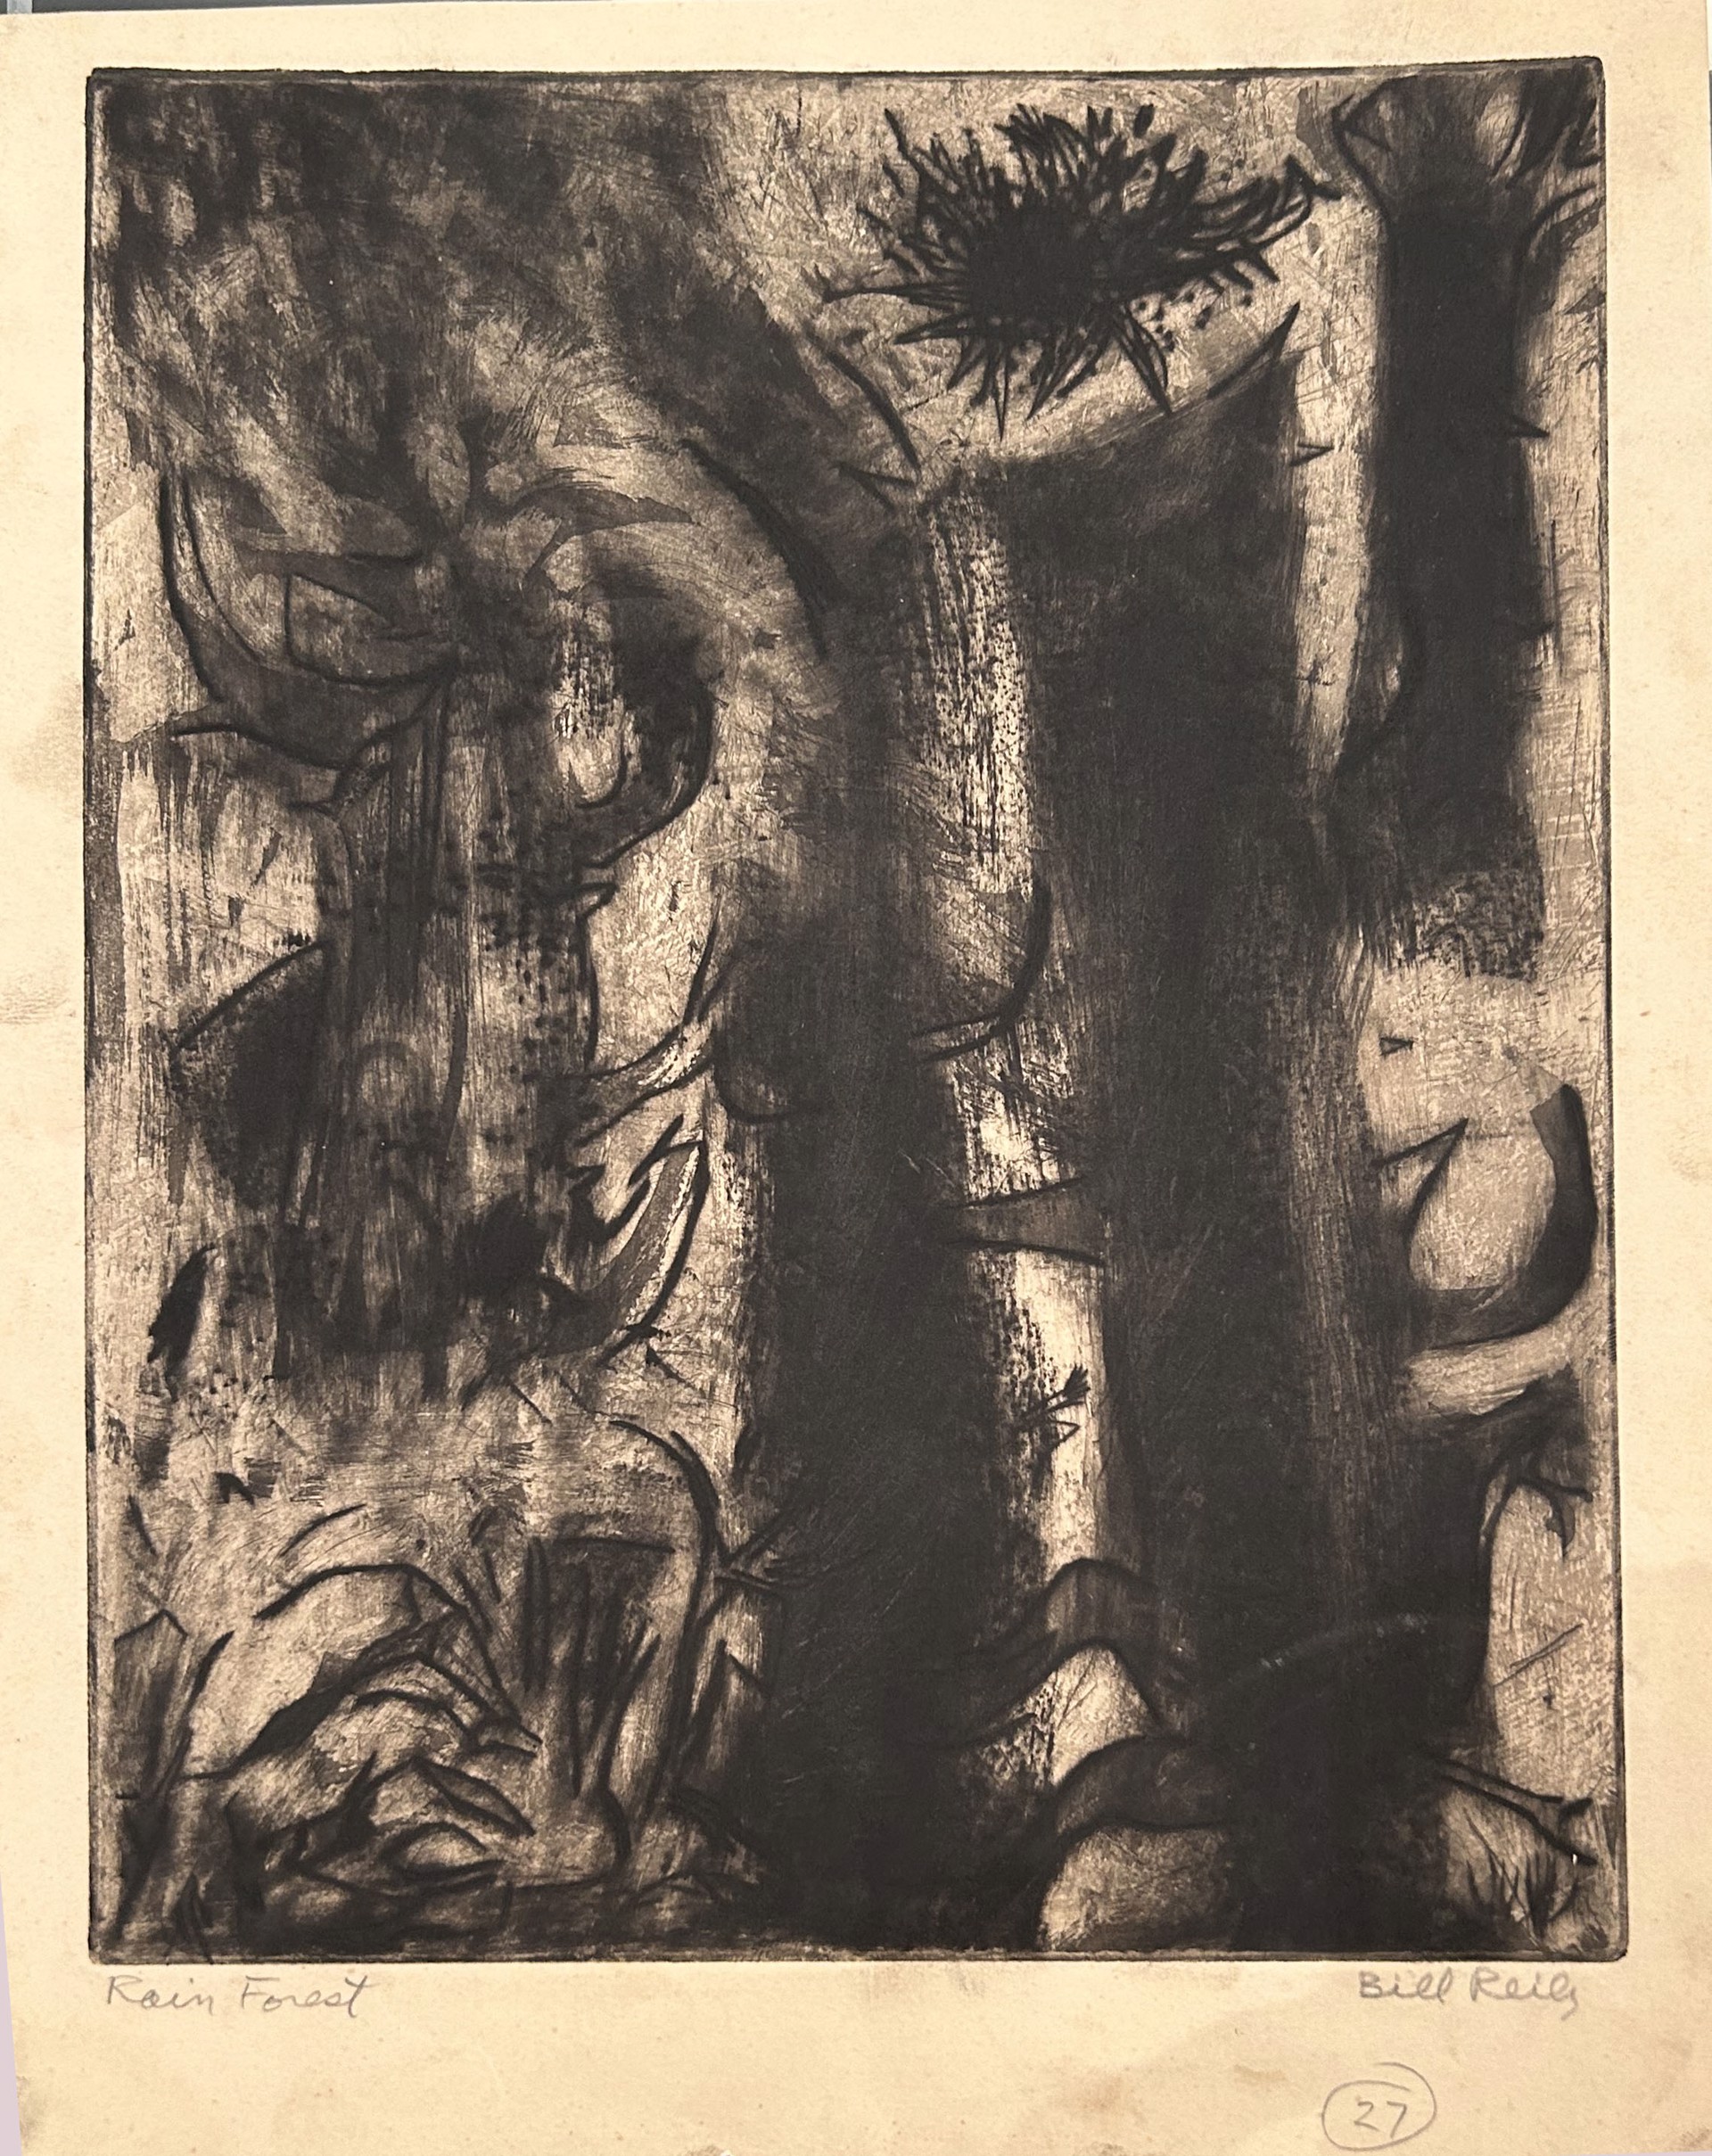 27e. Rain Forest by Bill Reily - Prints